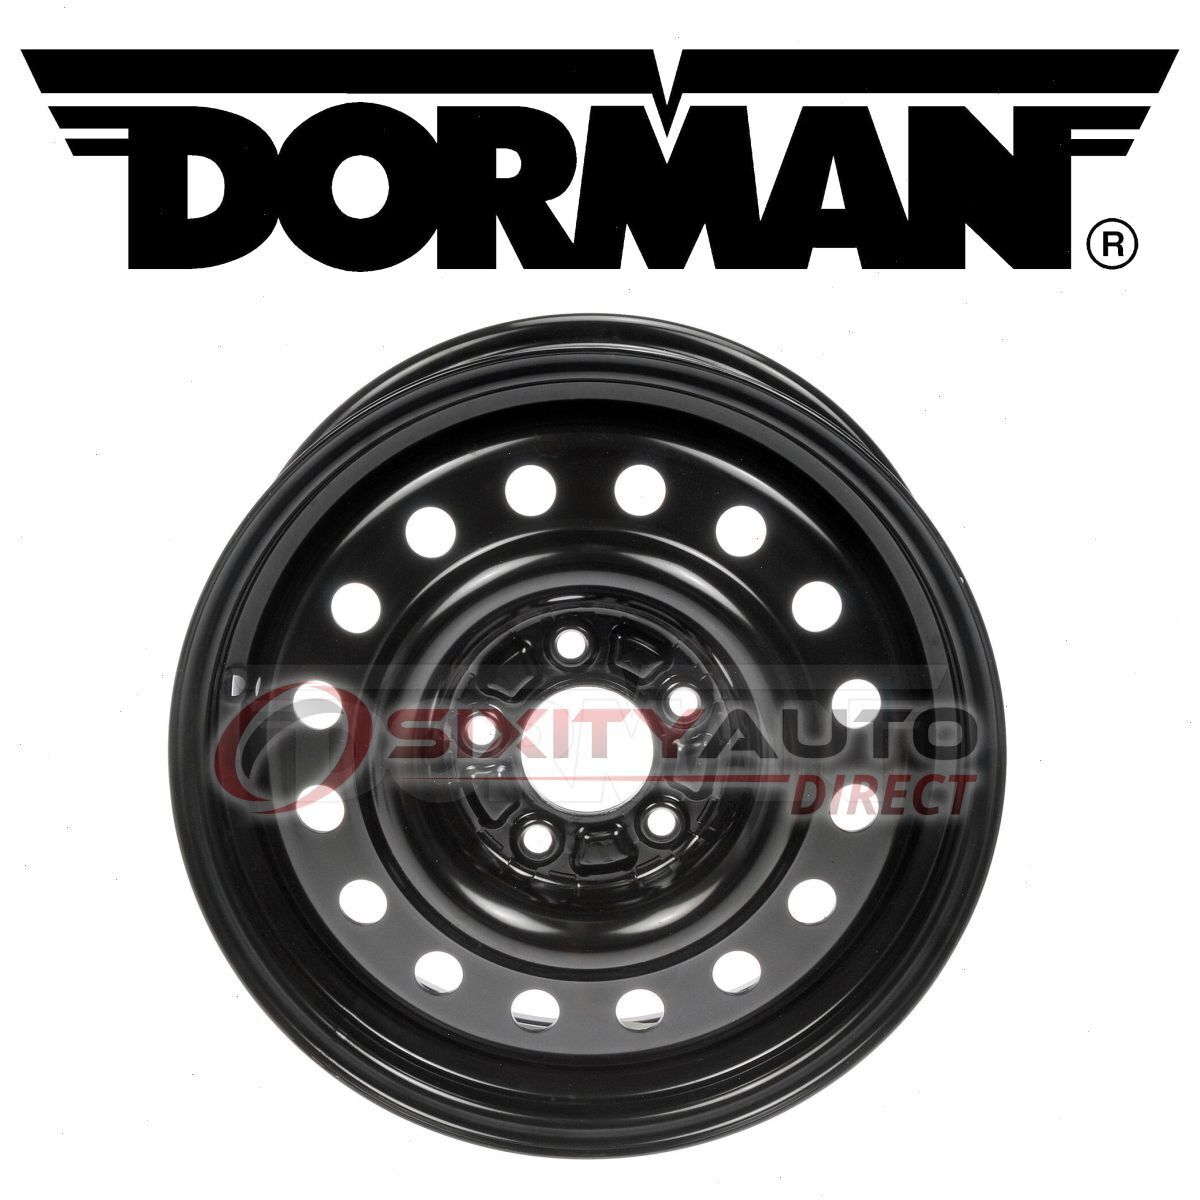 Dorman Wheel for 2003-2005 Pontiac Aztek Tire  vc